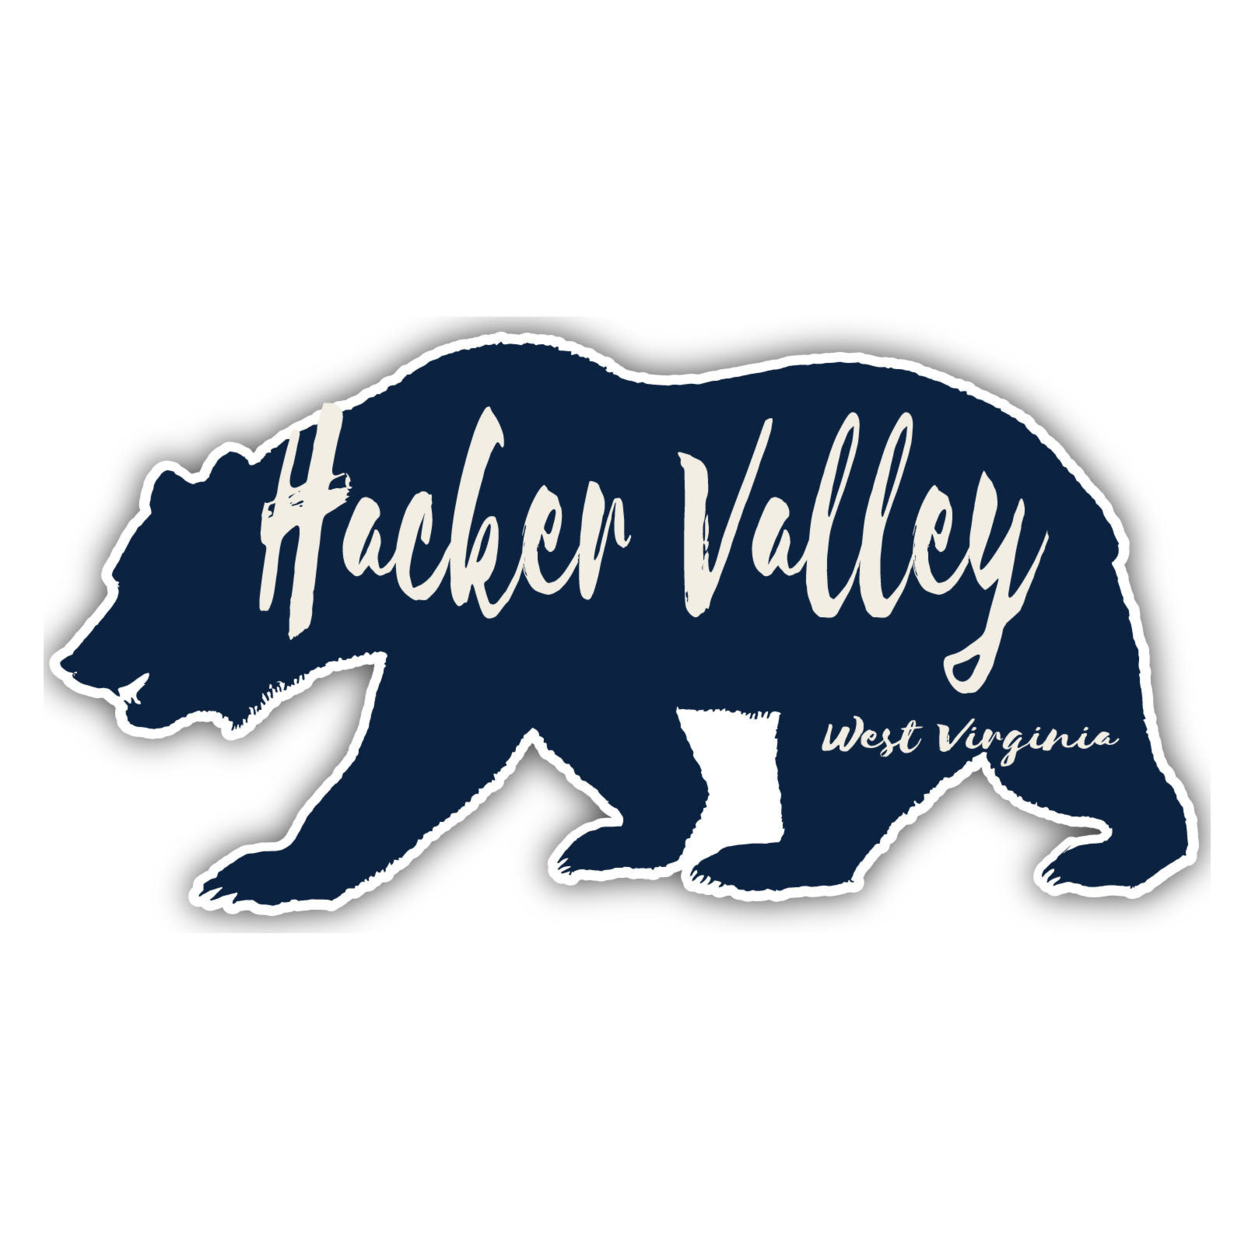 Hacker Valley West Virginia Souvenir Decorative Stickers (Choose Theme And Size) - Single Unit, 8-Inch, Bear